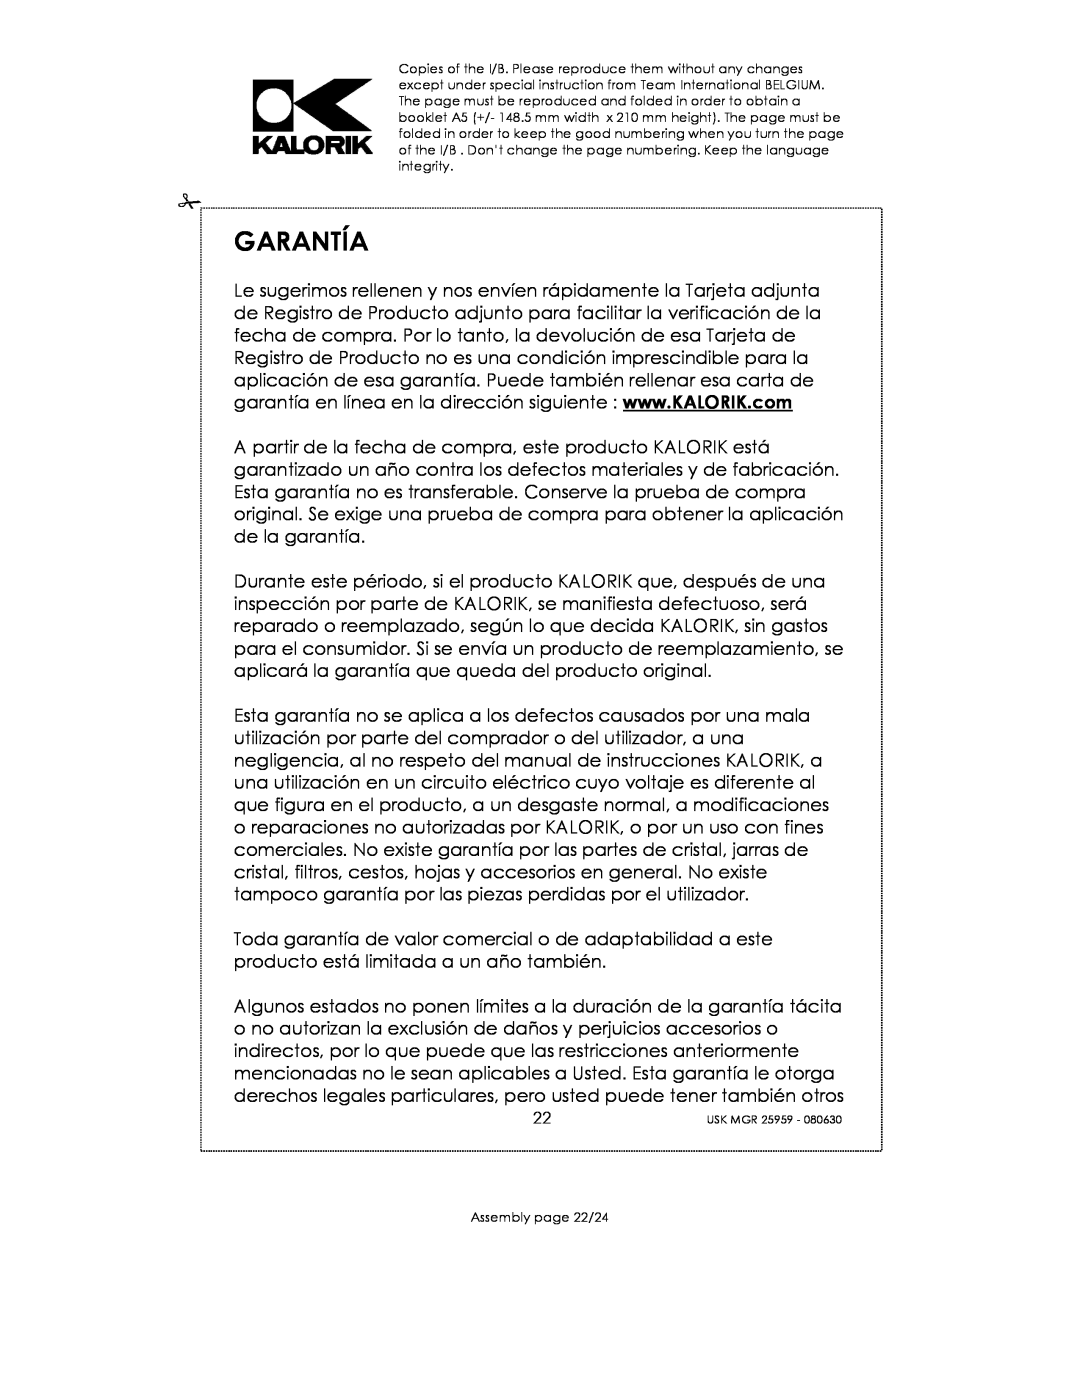 Kalorik USK MGR 25959 manual Garantía, Assembly page 22/24 